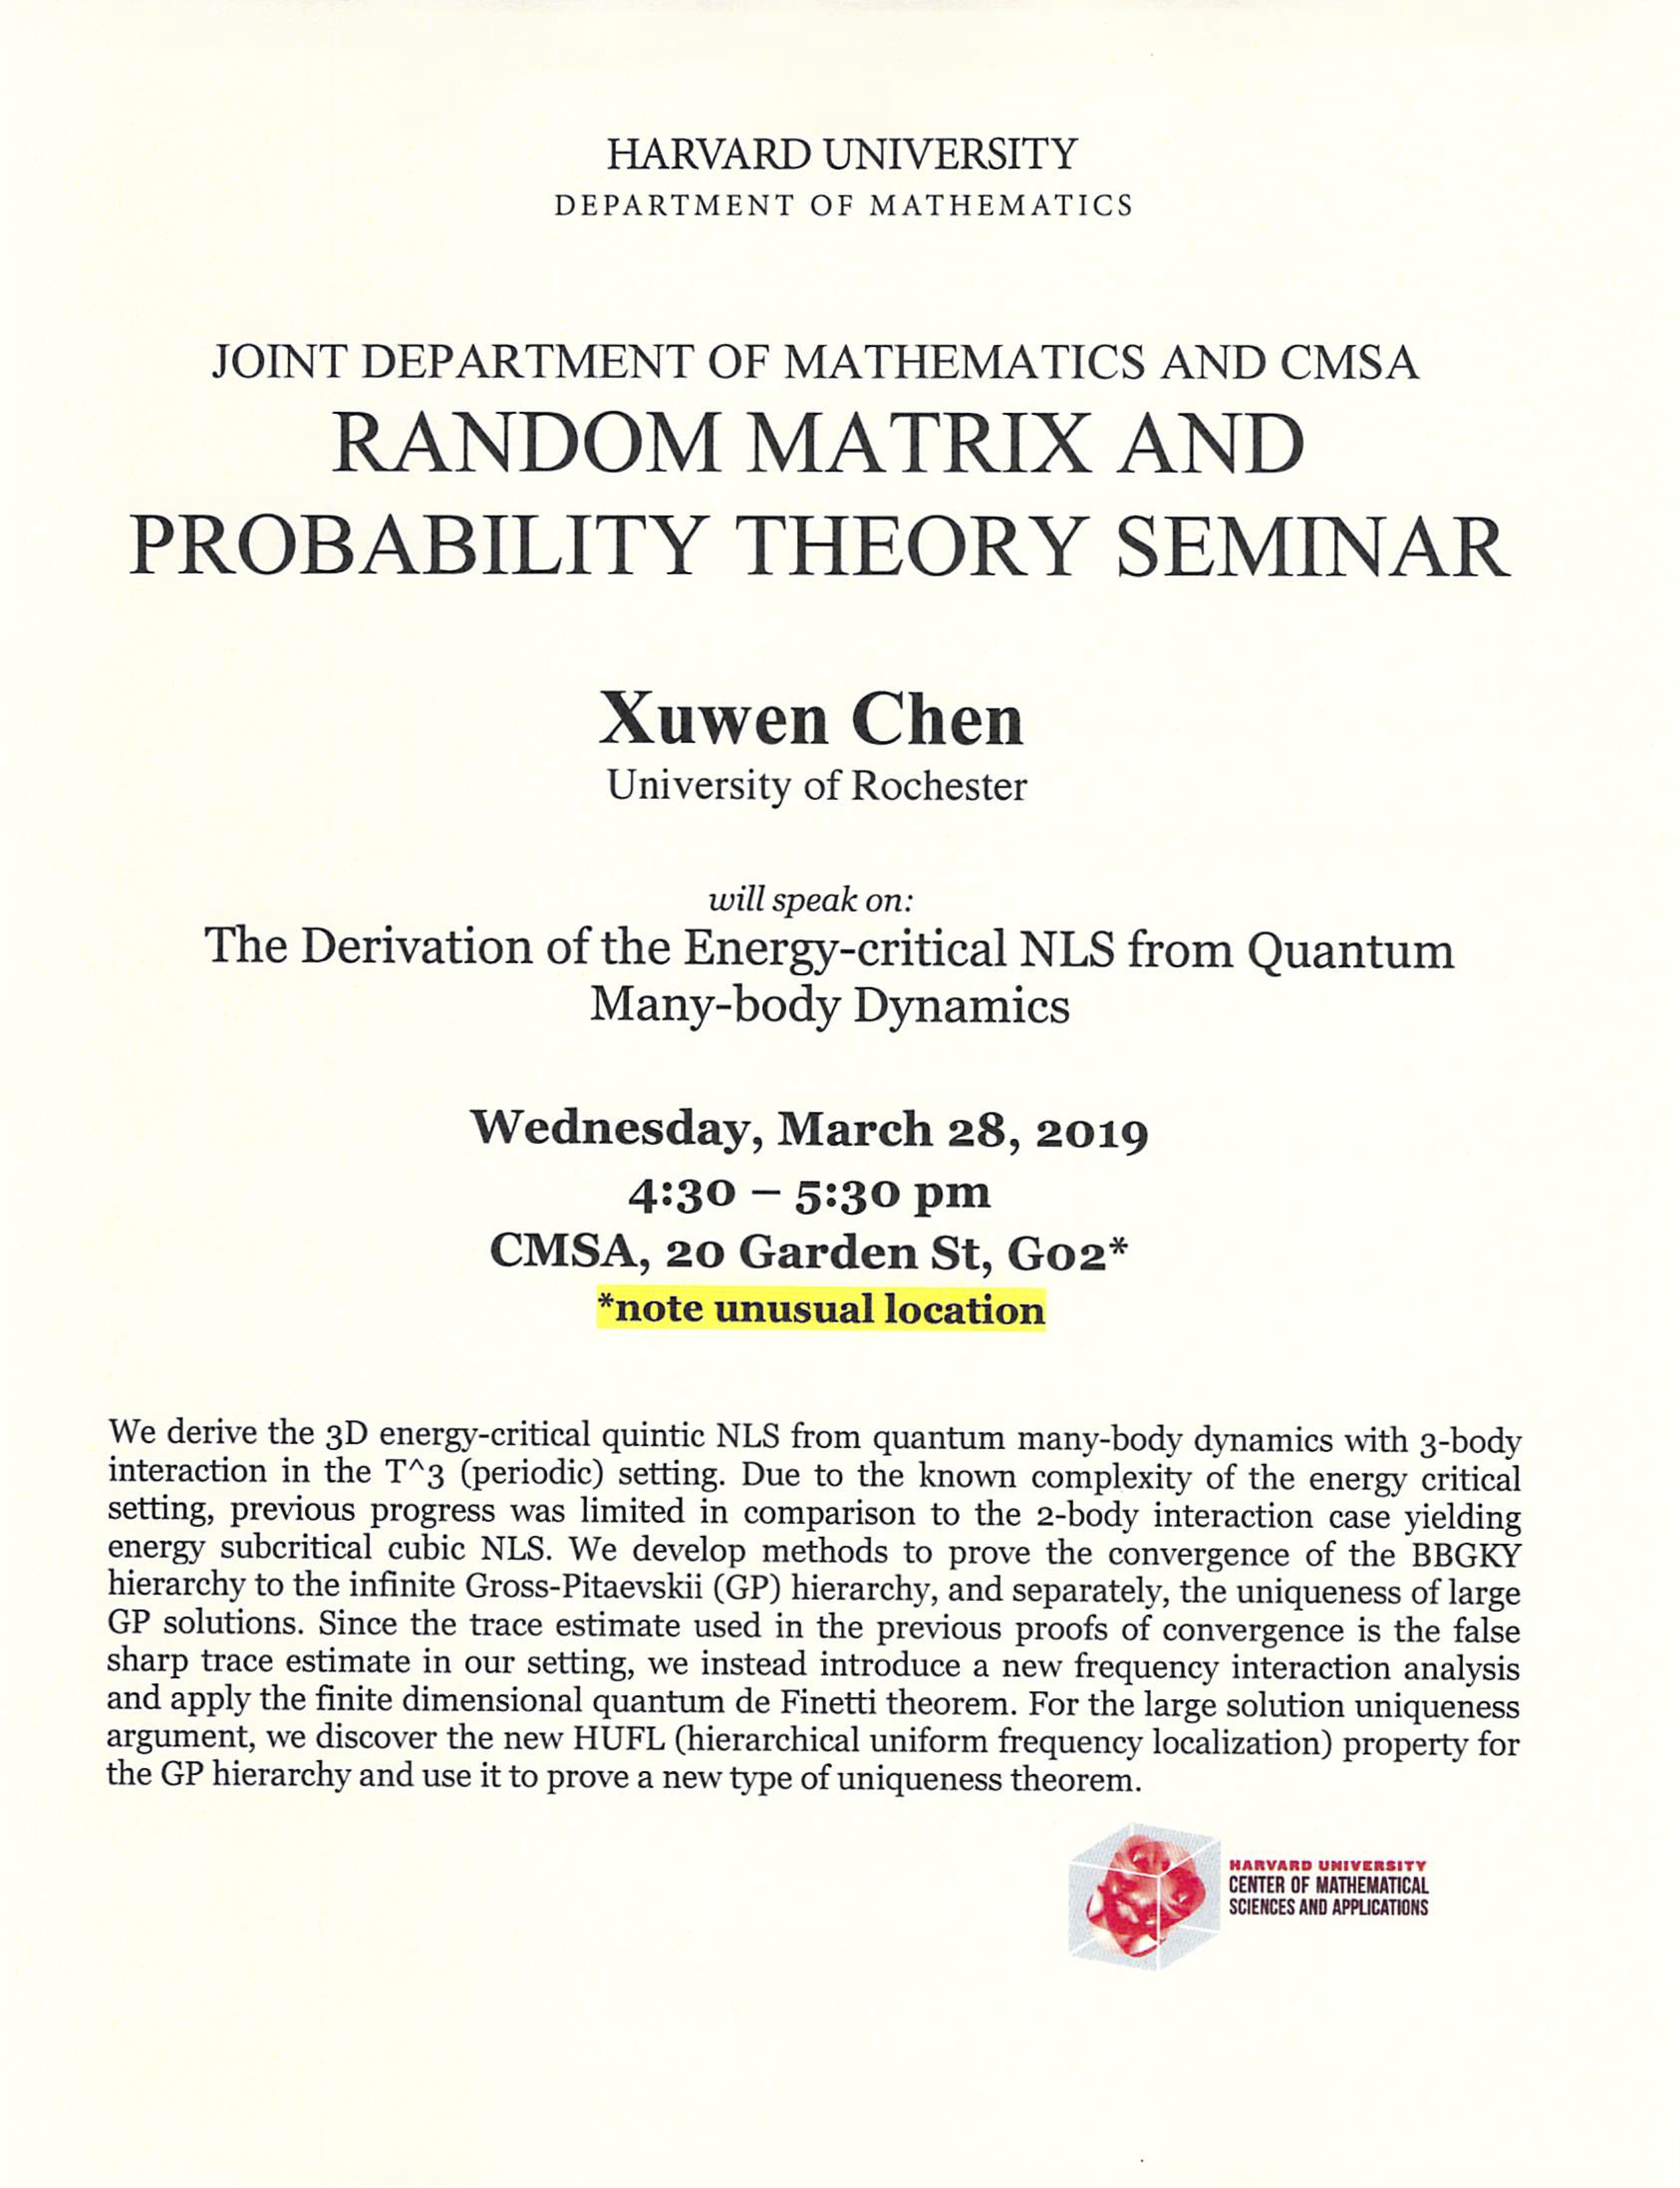 3/28/2019 Random Matrix and Probability Theory Seminar